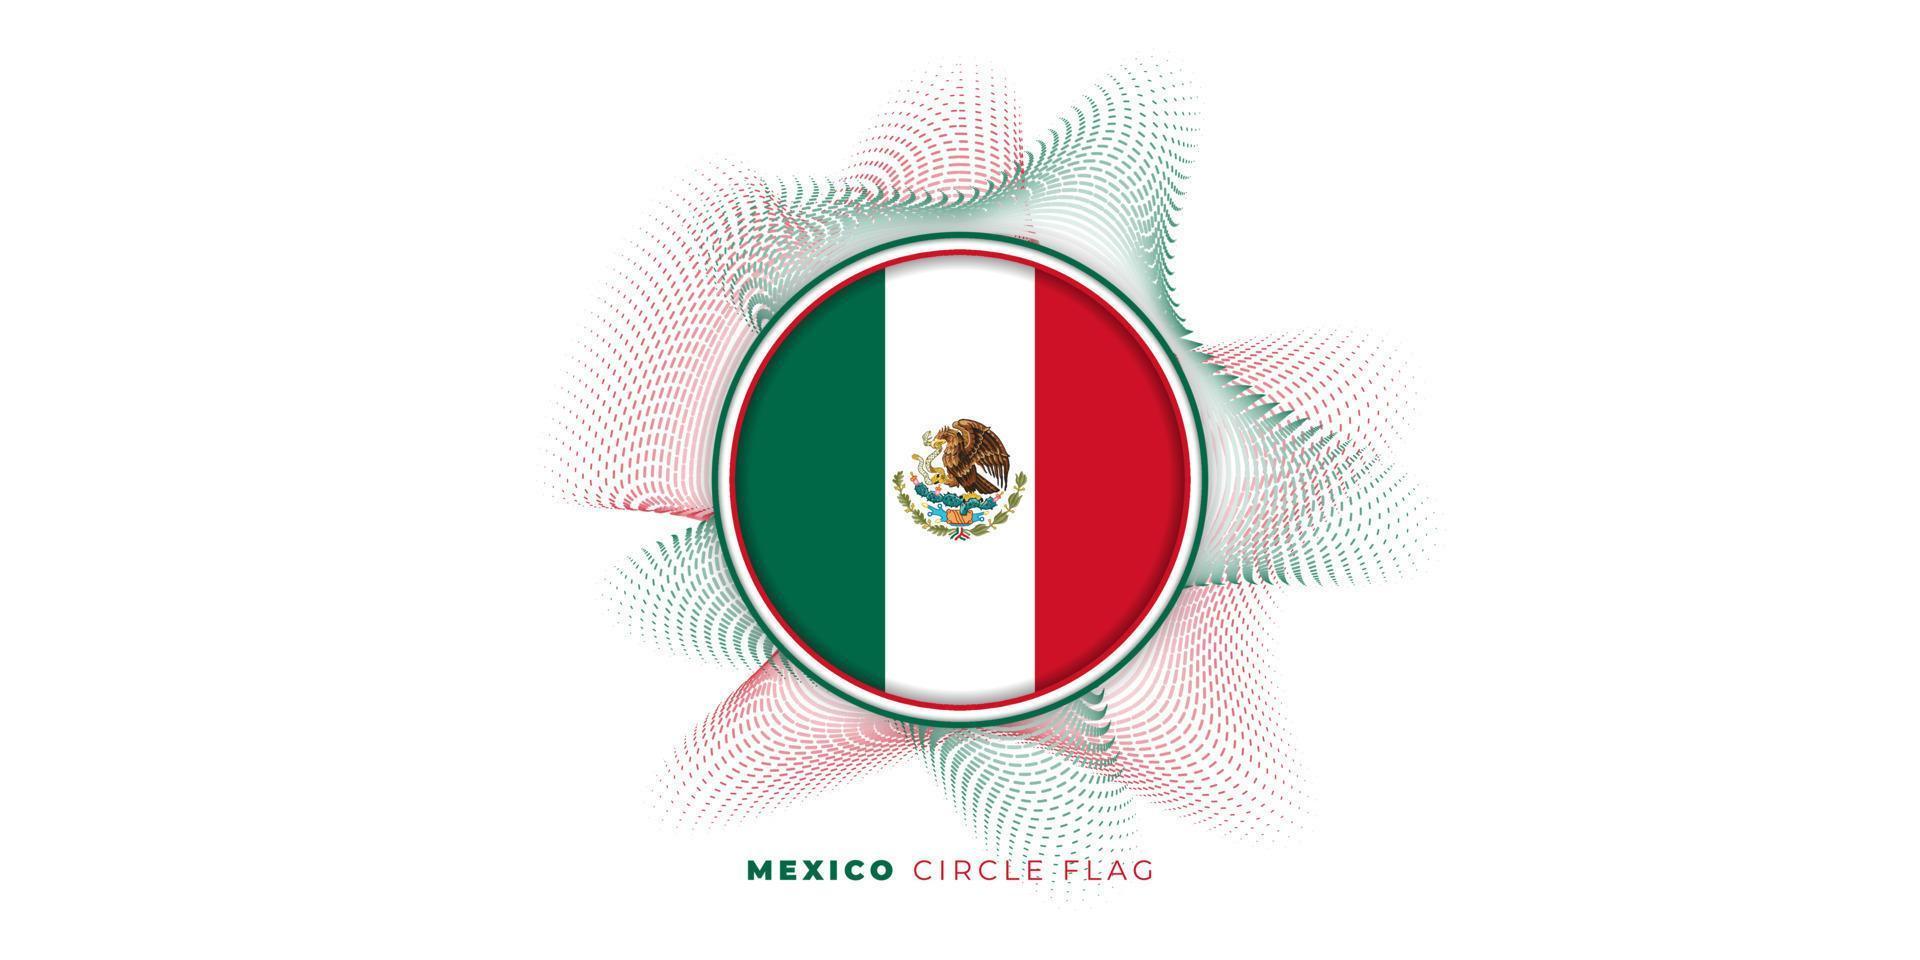 Mexico circle flag vector illustration